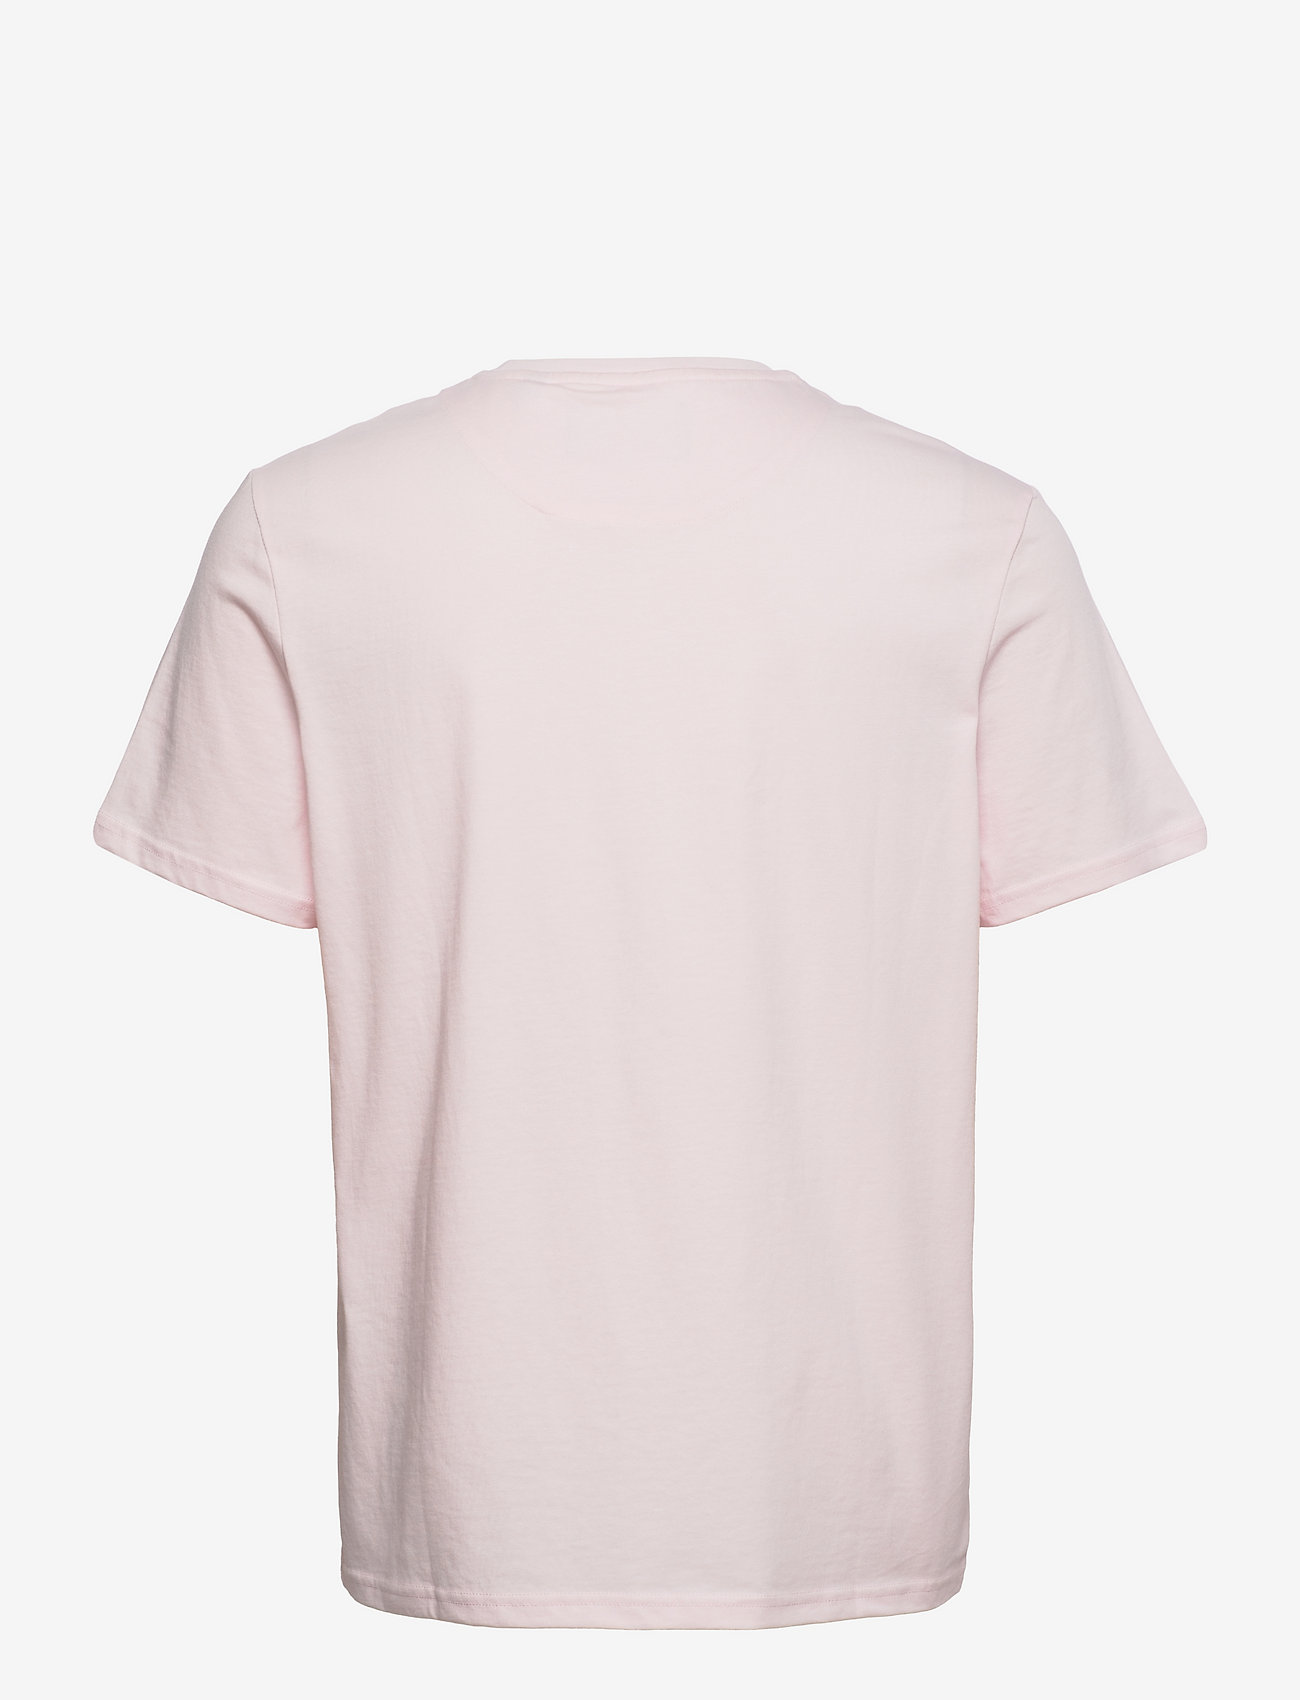 Lyle & Scott - Plain T-Shirt - najniższe ceny - light pink - 1